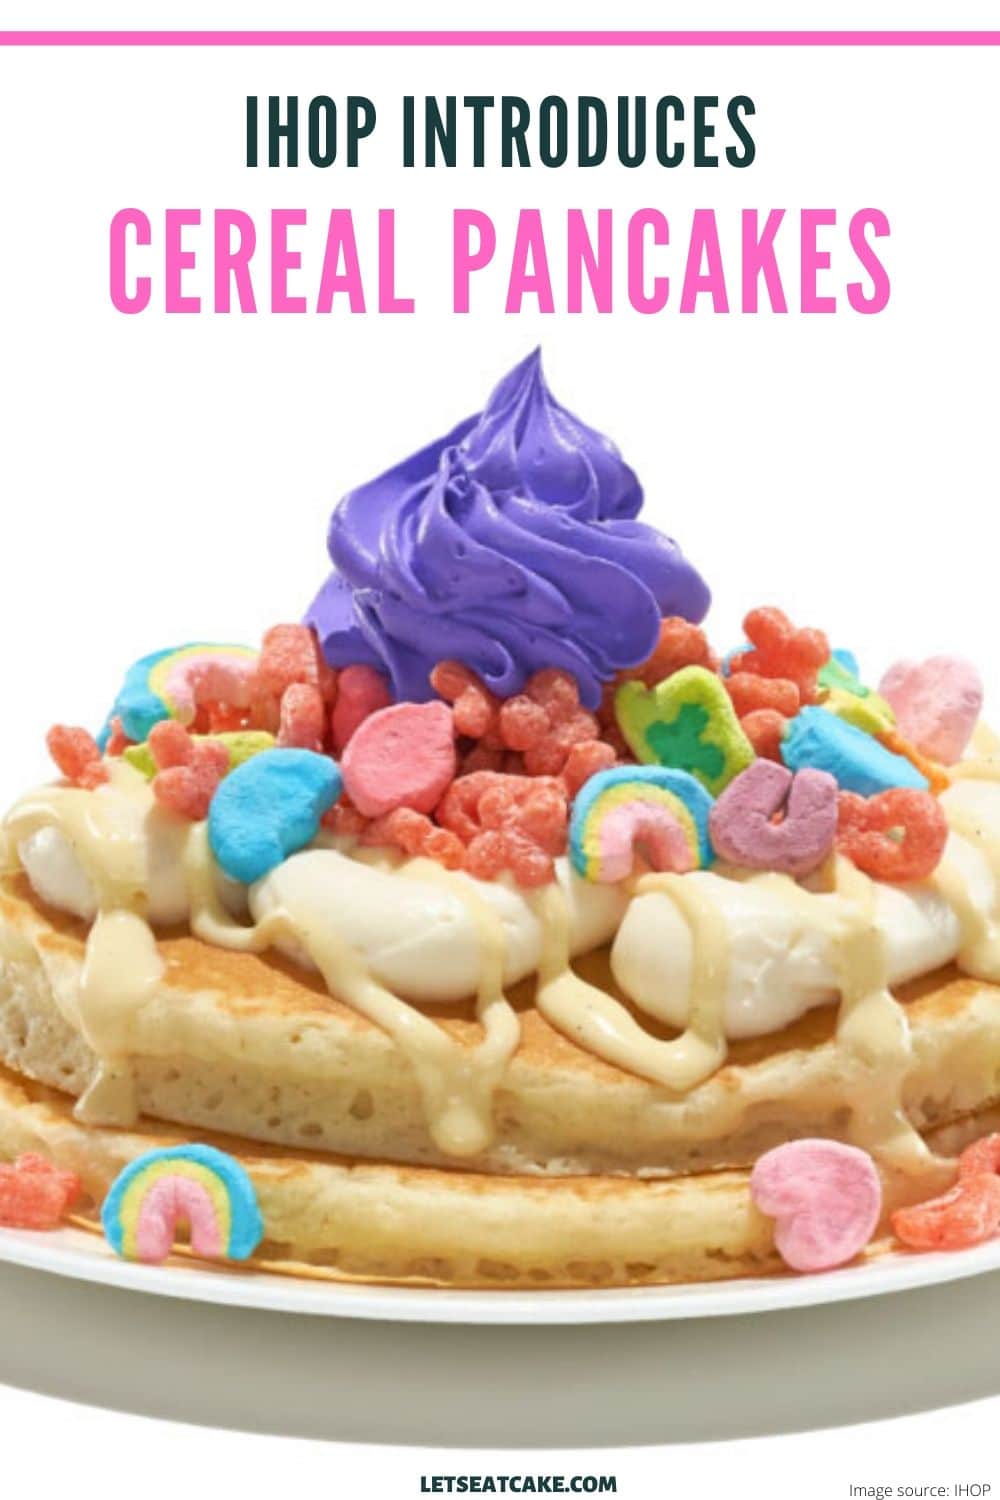 IHOP Cereal Pancakes